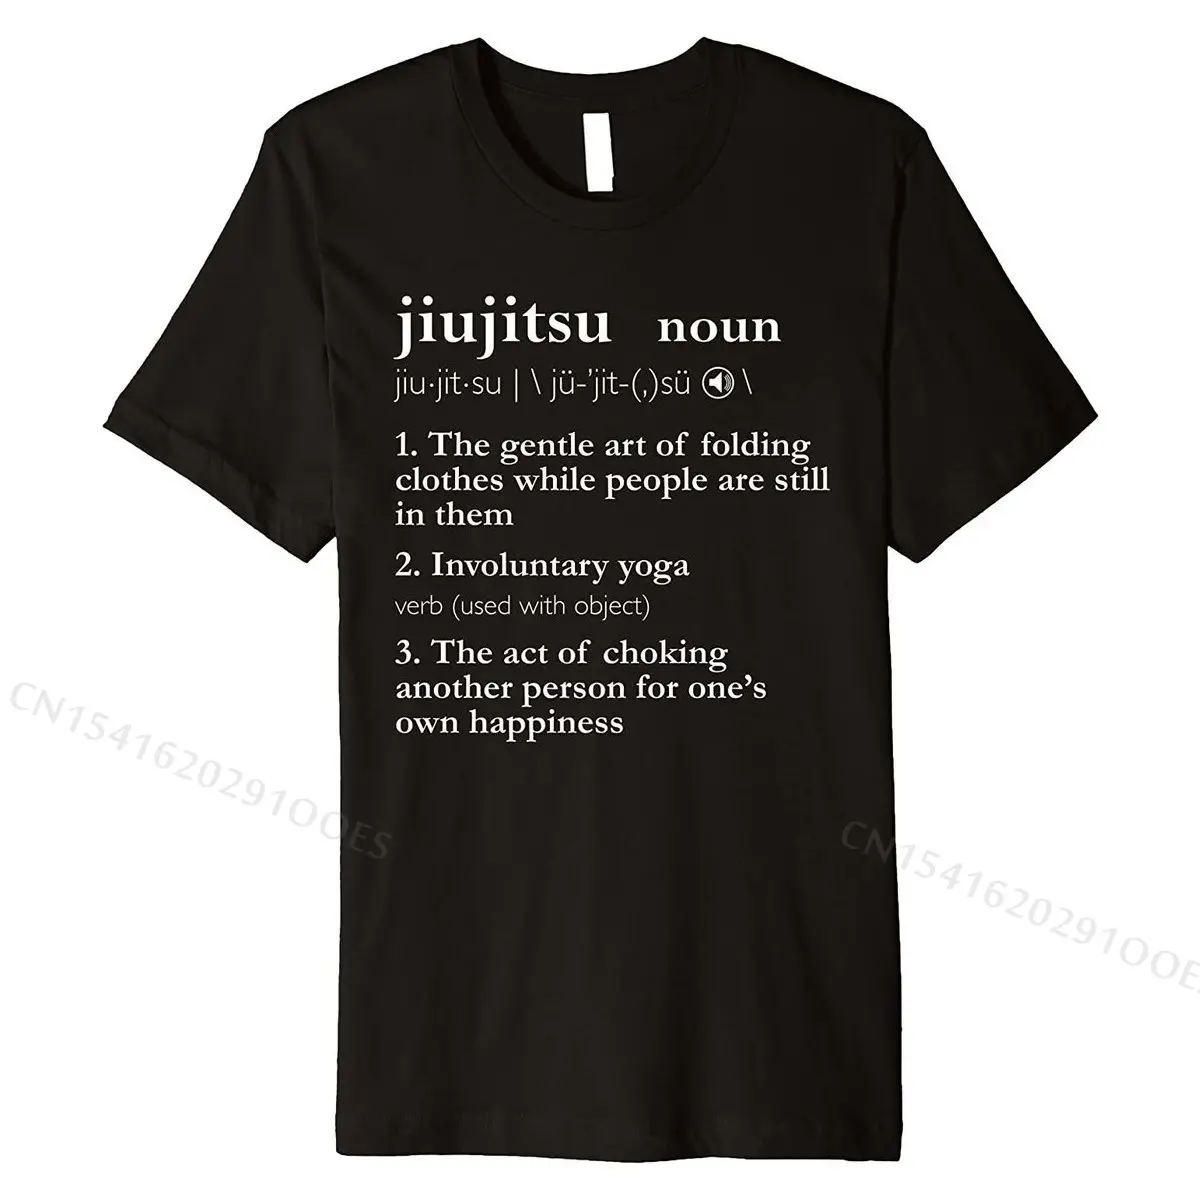 Funny Brazilian Jiu Jitsu BJJ Gifts MMA Cage Fighter Men Him Premium T-Shirt Top T-shirts Tops Shirts Oversized Slim Fit Summer